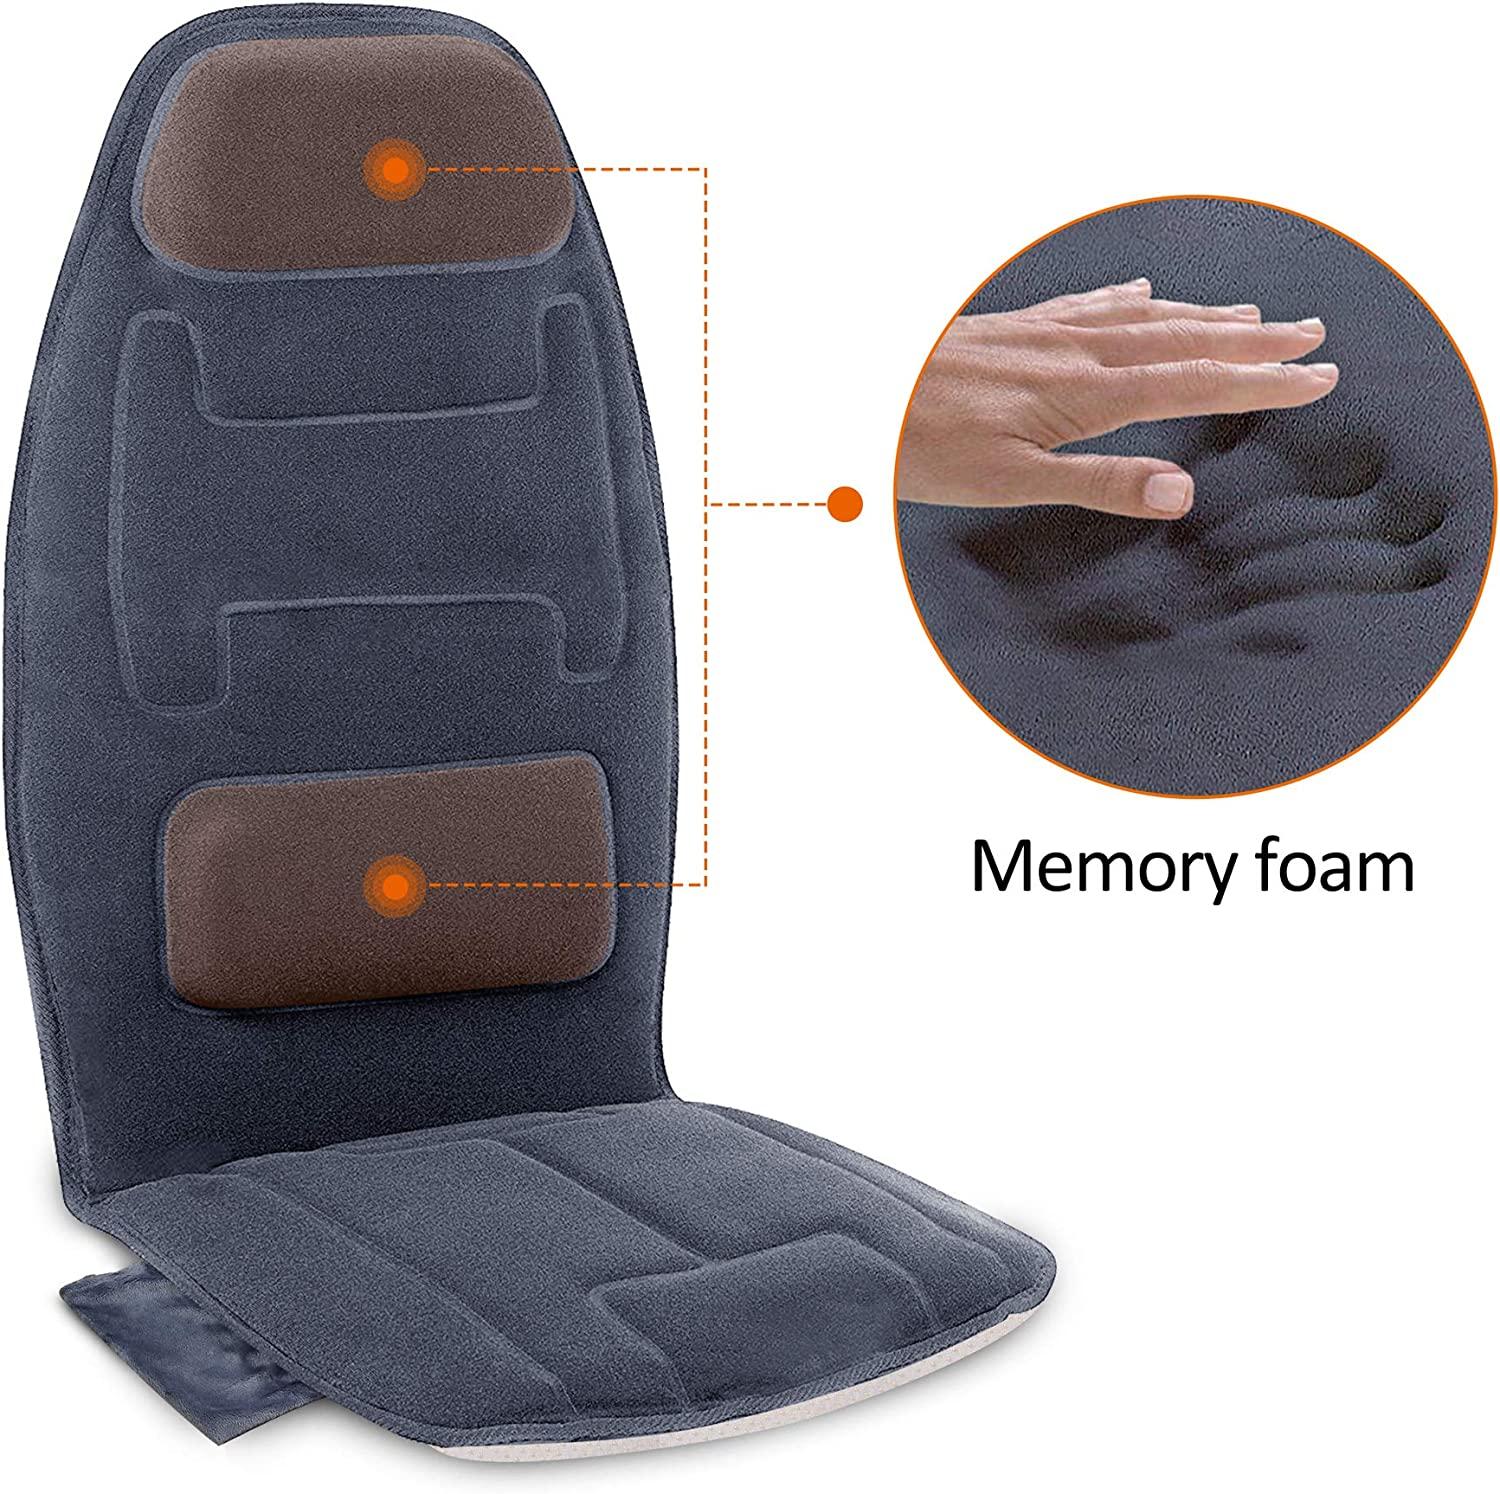 Vibration Massage Seat Cushion with 10 Vibration Motors